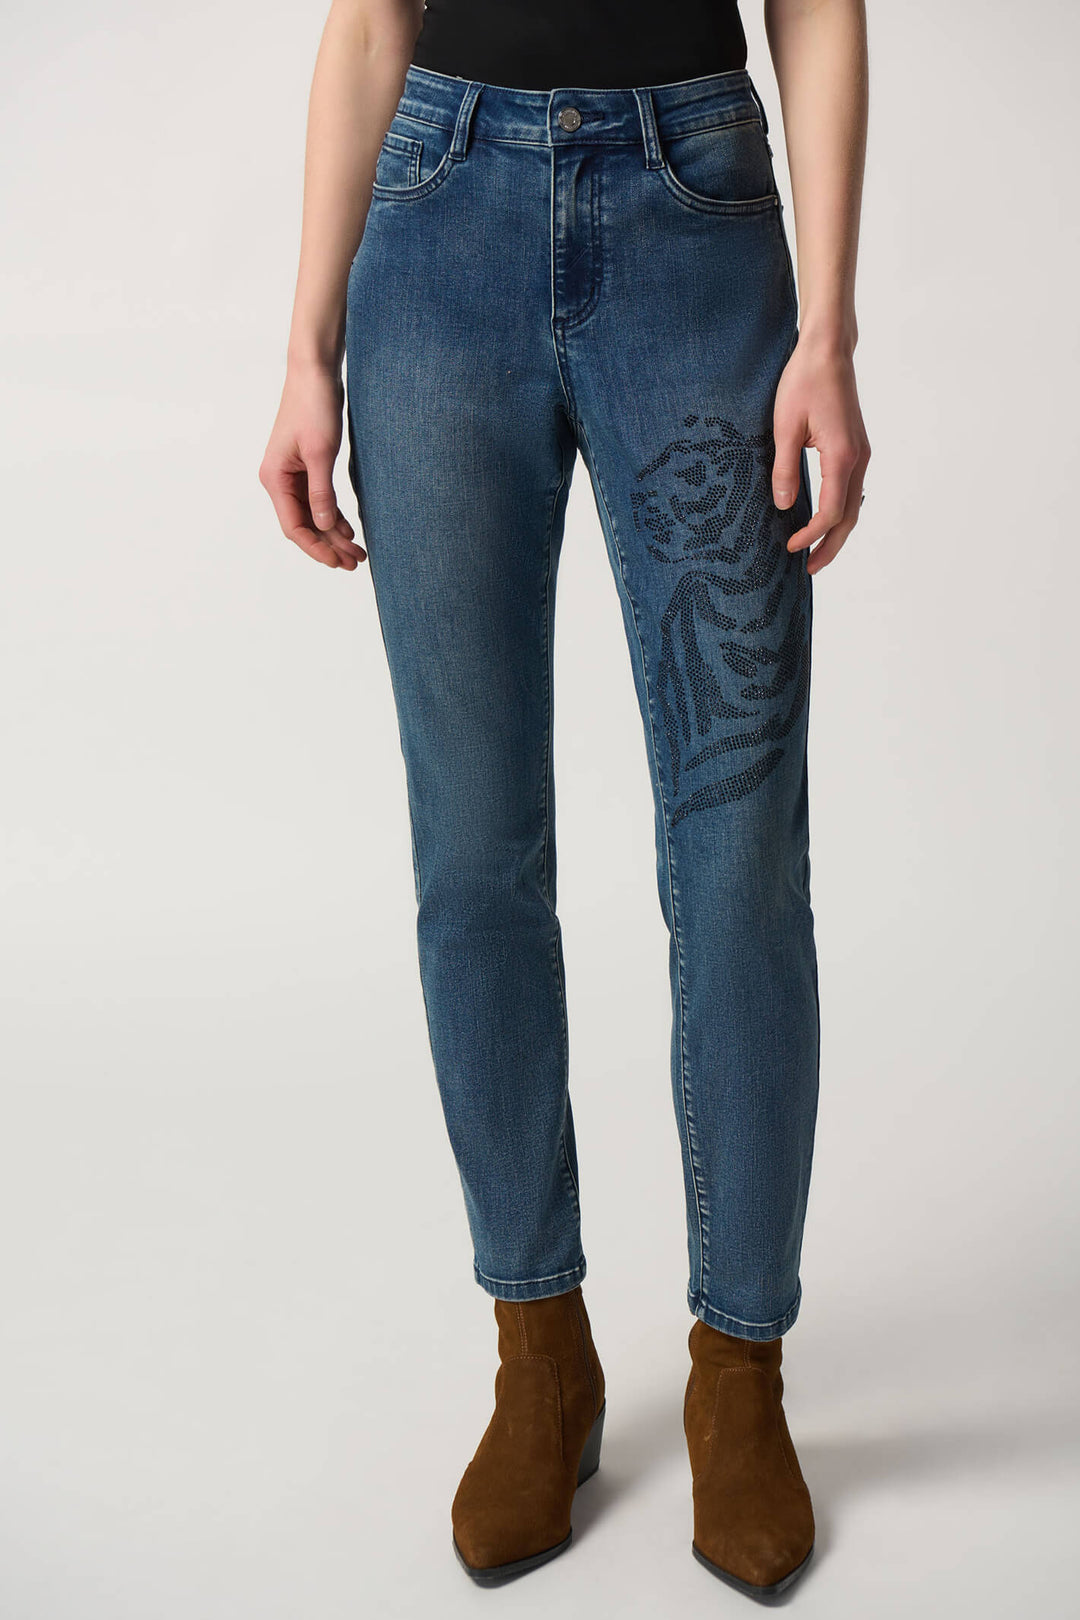 Joseph Ribkoff 233932 Medium Blue Embellished Denim Jeans - Experience Boutique